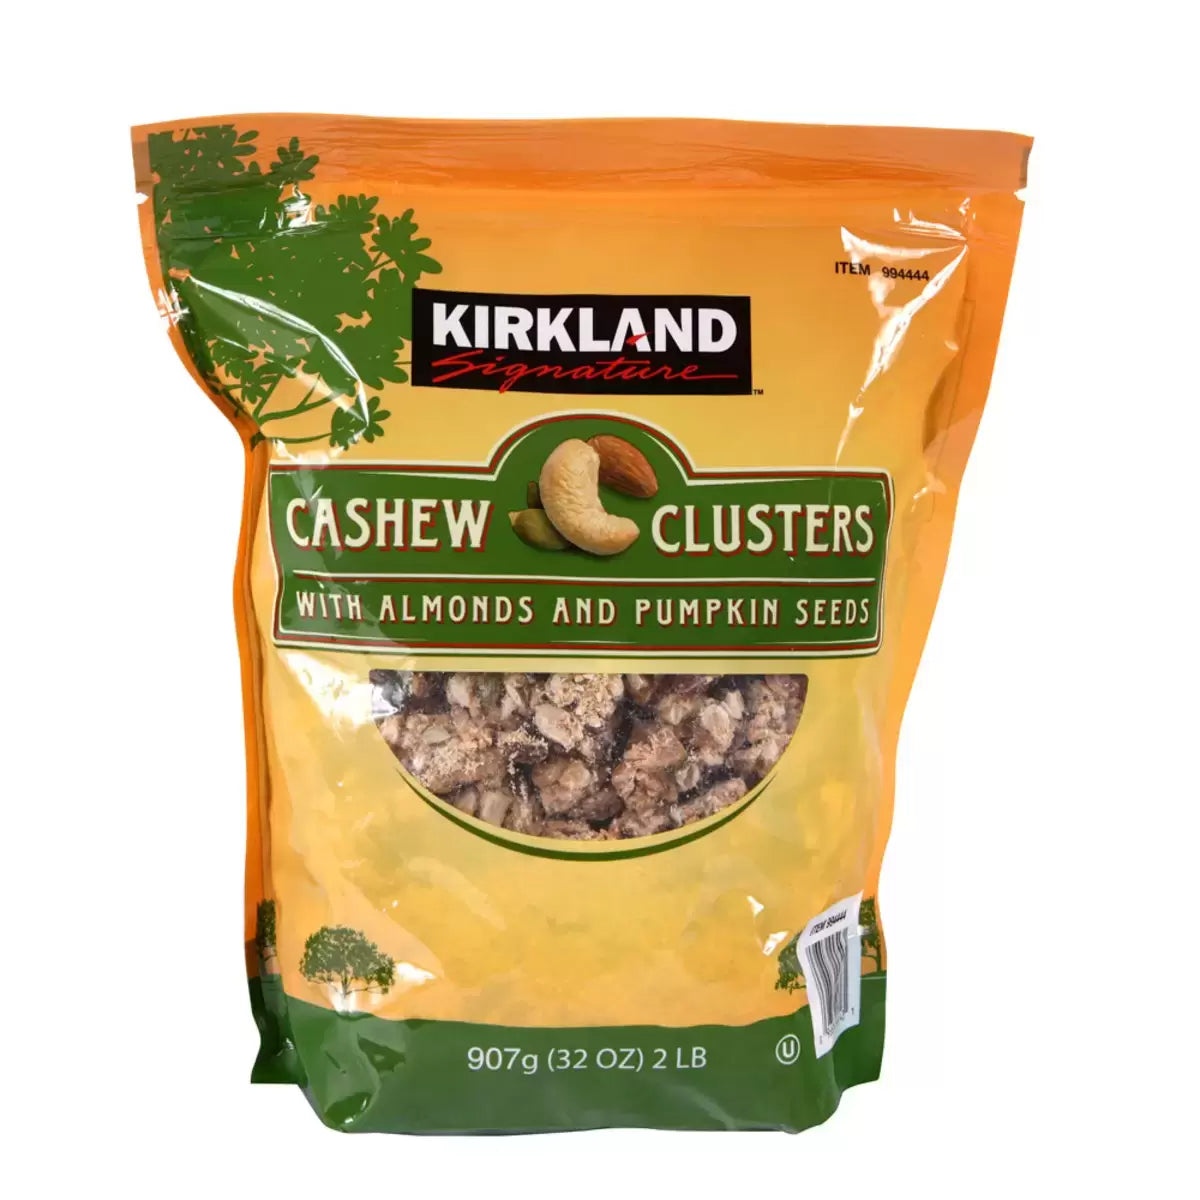 Kirkland Signature Cashew Clusters with Almonds & Pumpkin Seeds - 907g